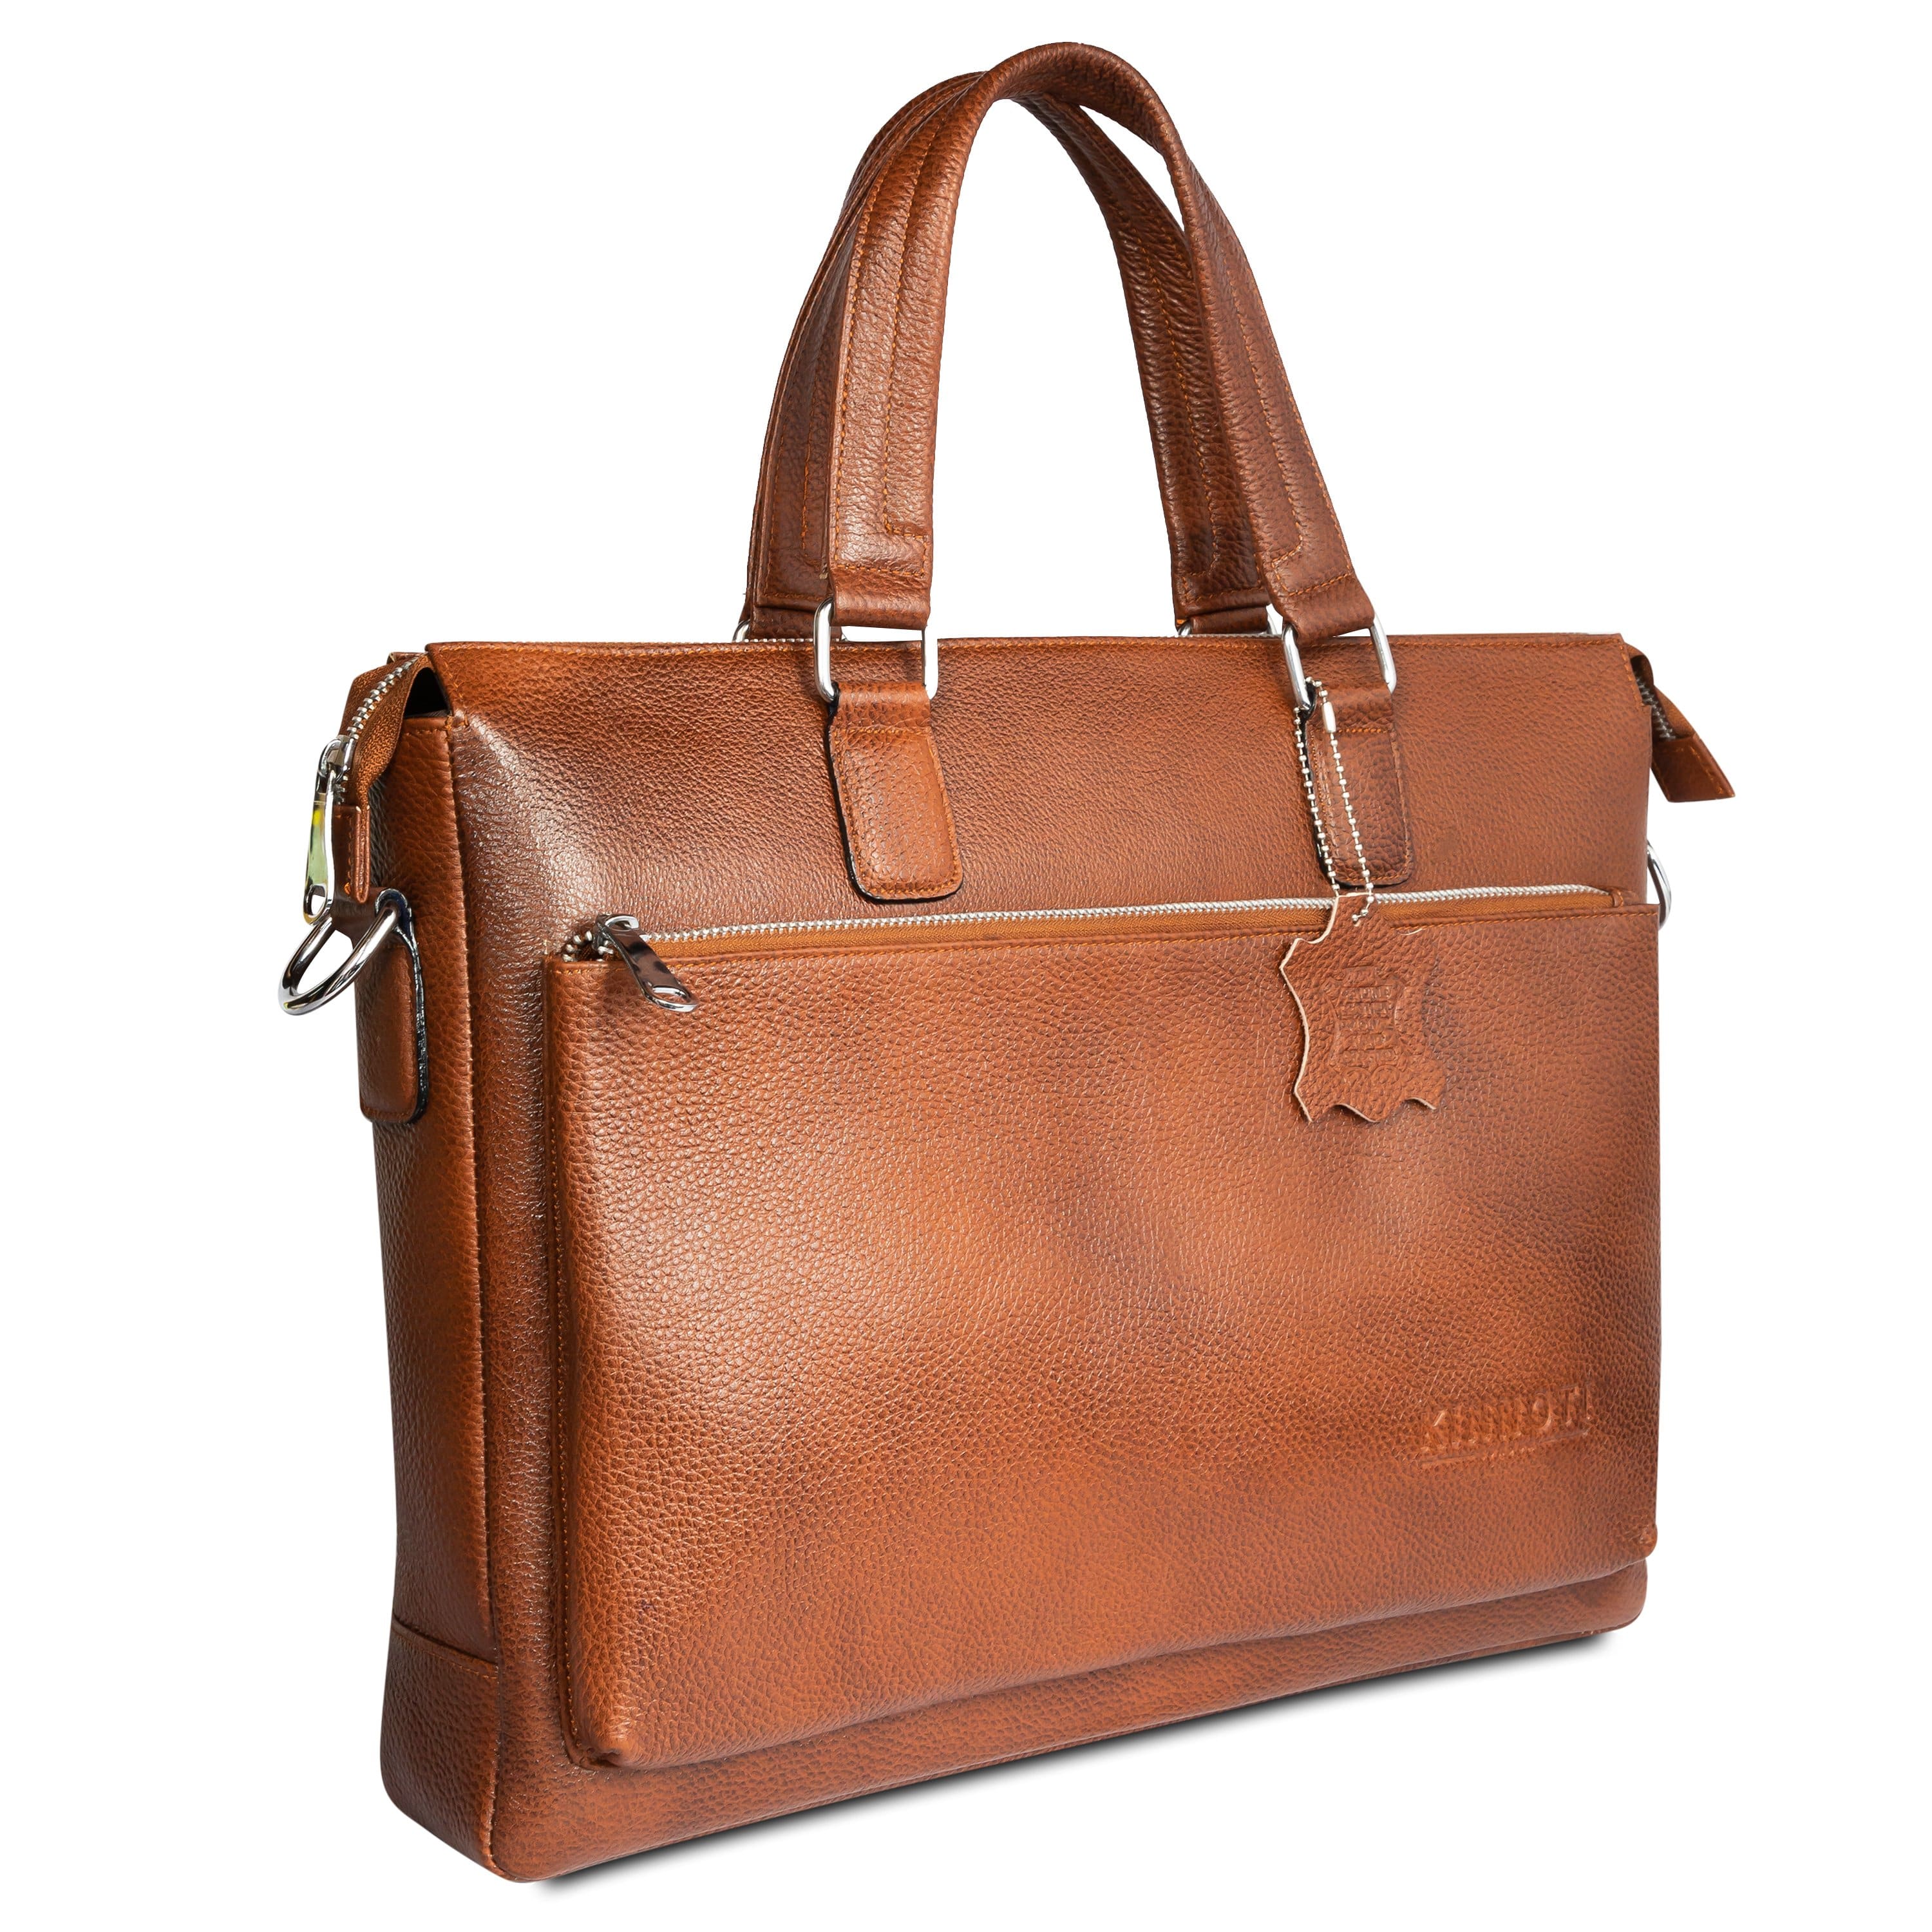 kinnoti LAPTOP BAGS Men Solid Genuine Leather Laptop Bag